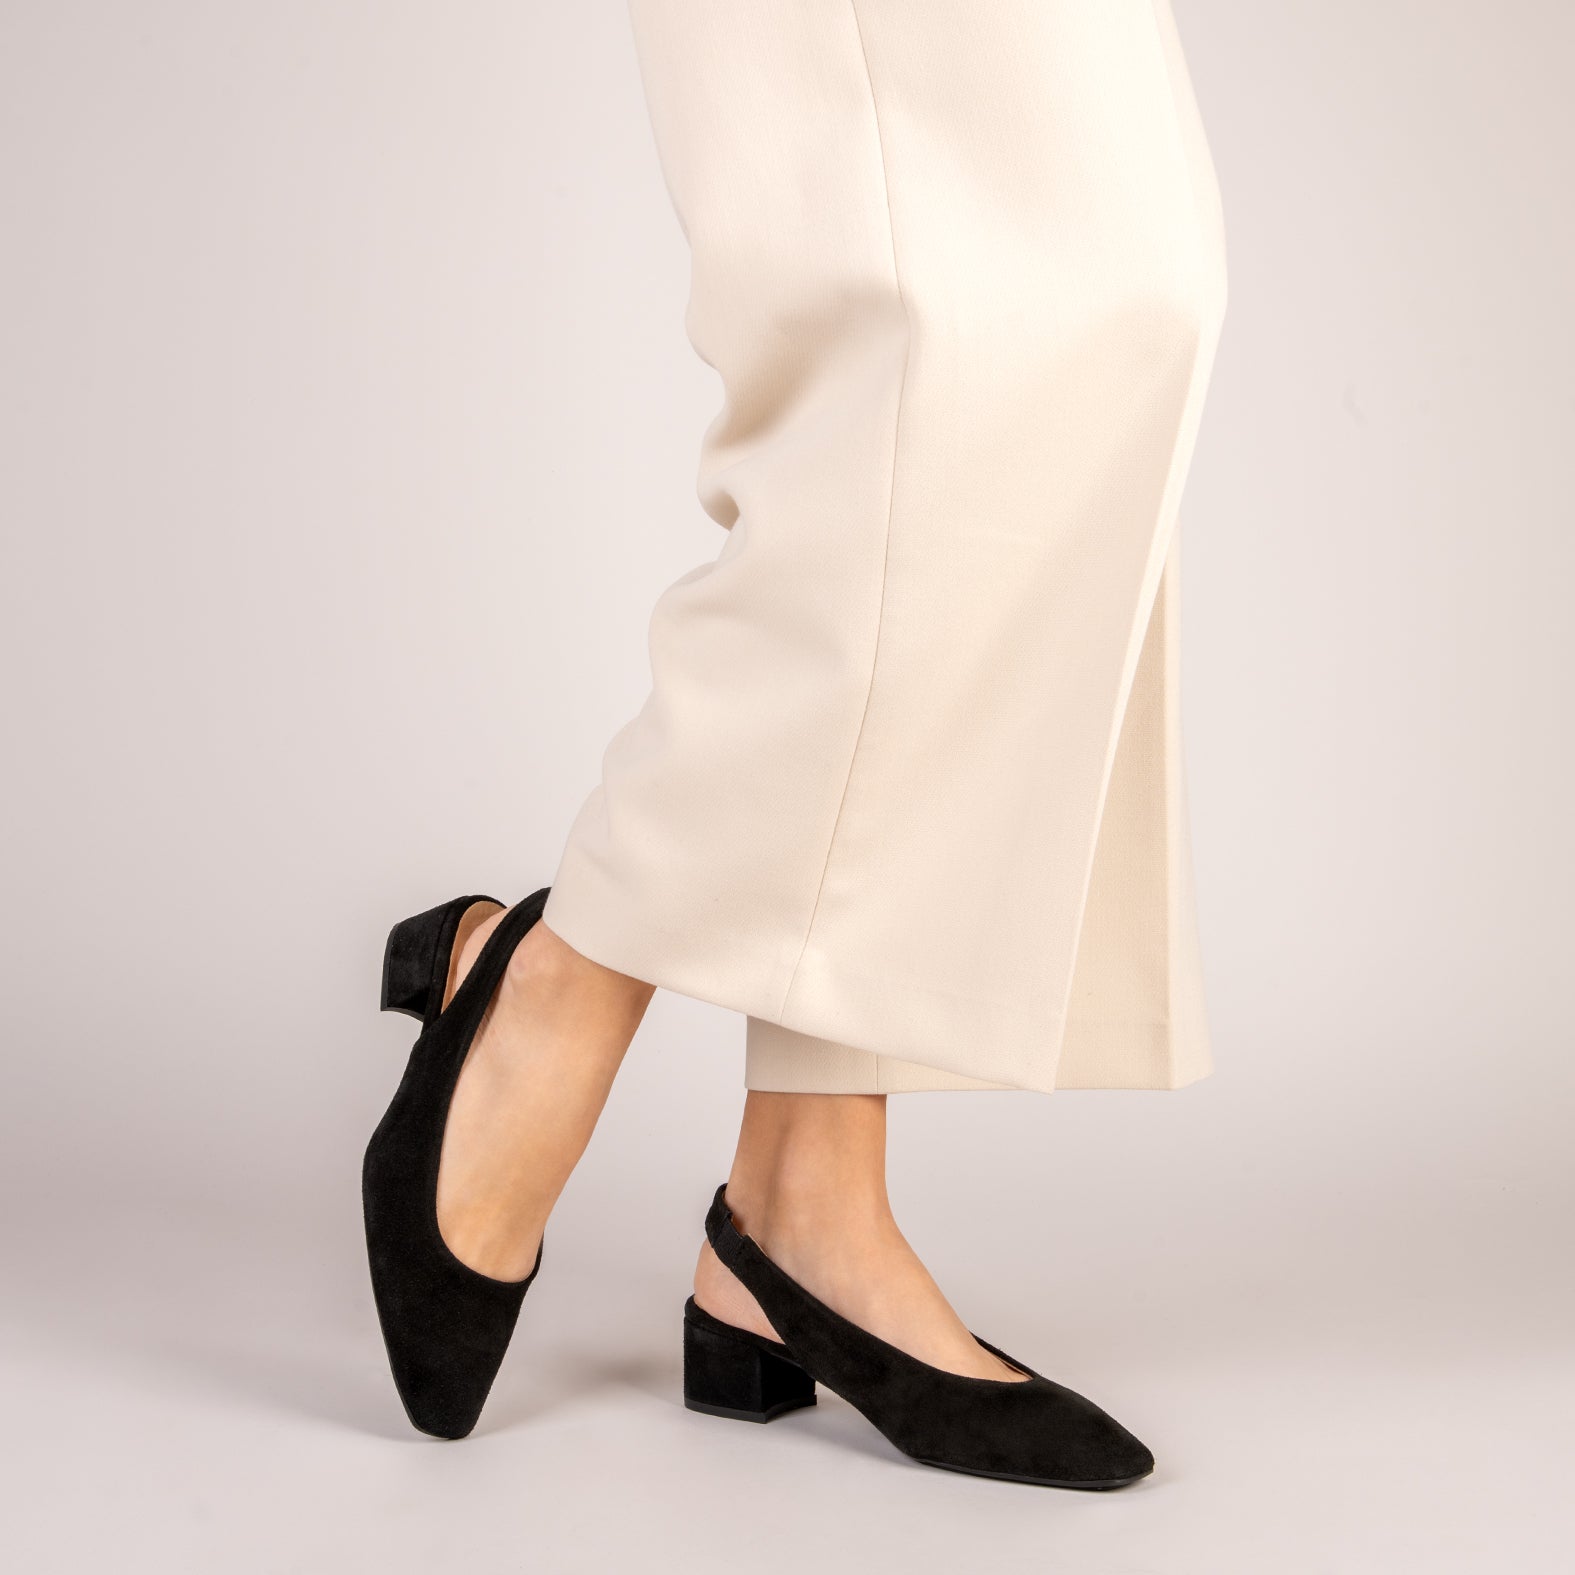 URBAN LADY – Zapatos de Tacón Destalonados NEGRO